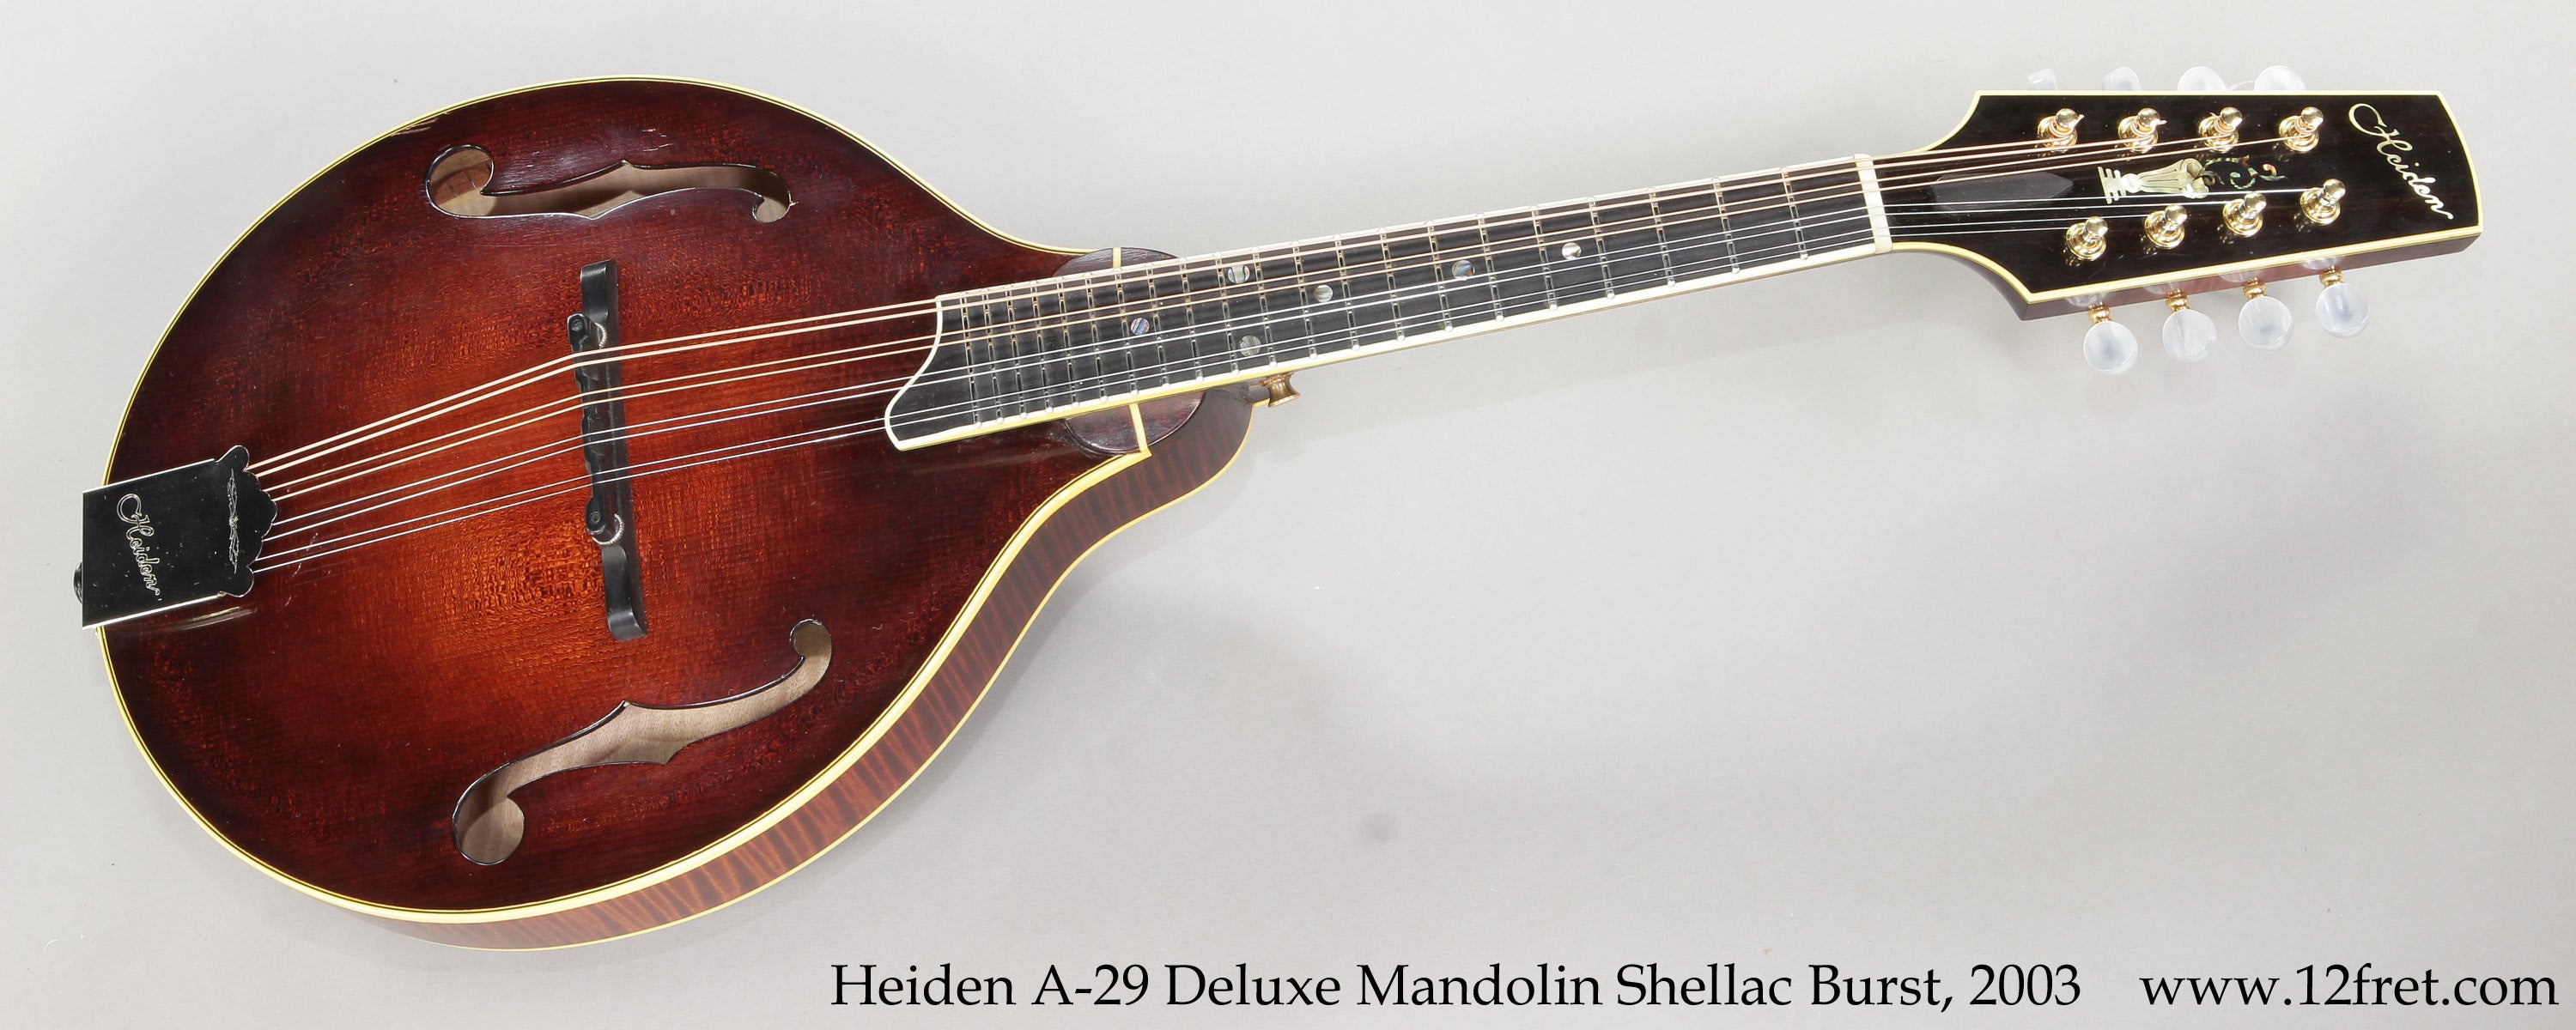 Heiden A-29 Deluxe Mandolin Shellac Burst, 2003 - The Twelfth Fret